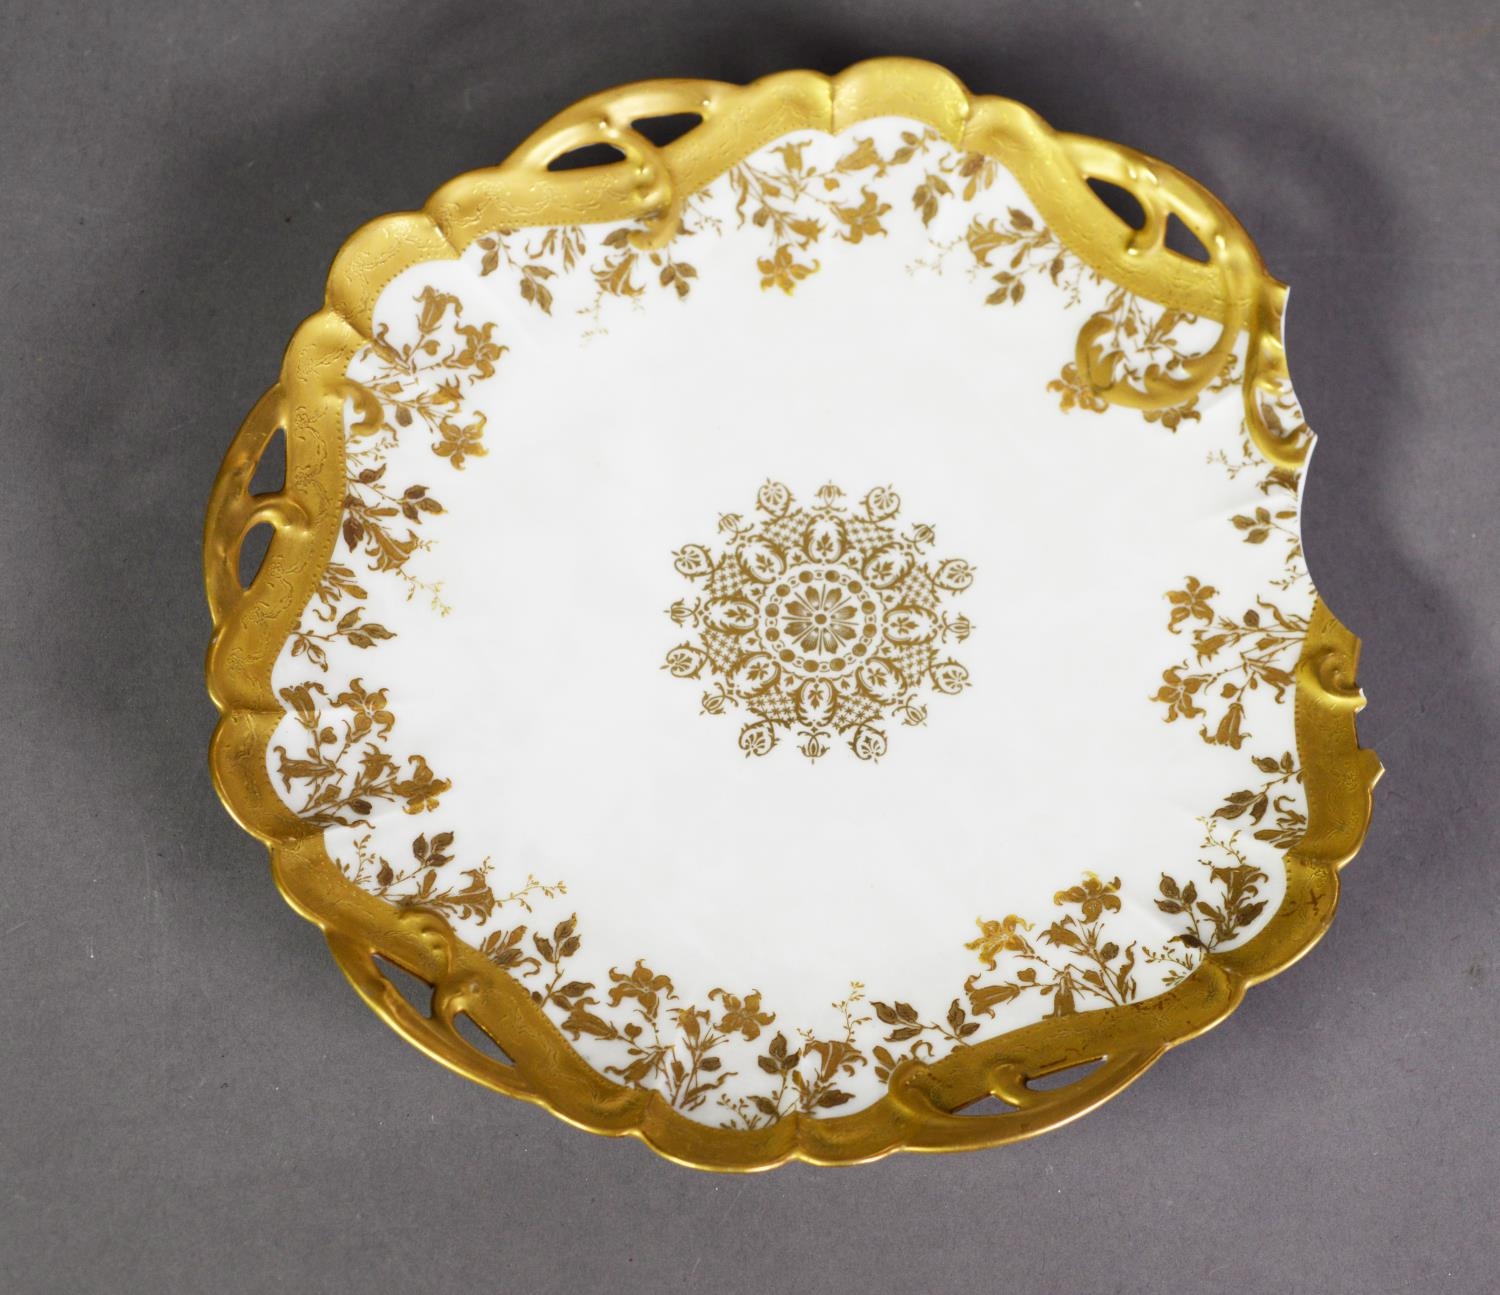 DE HAVILAND LIMOGES PART DESSERT SERVICE, with gilt decoration, plus an associated cake tray [10] - Image 2 of 2